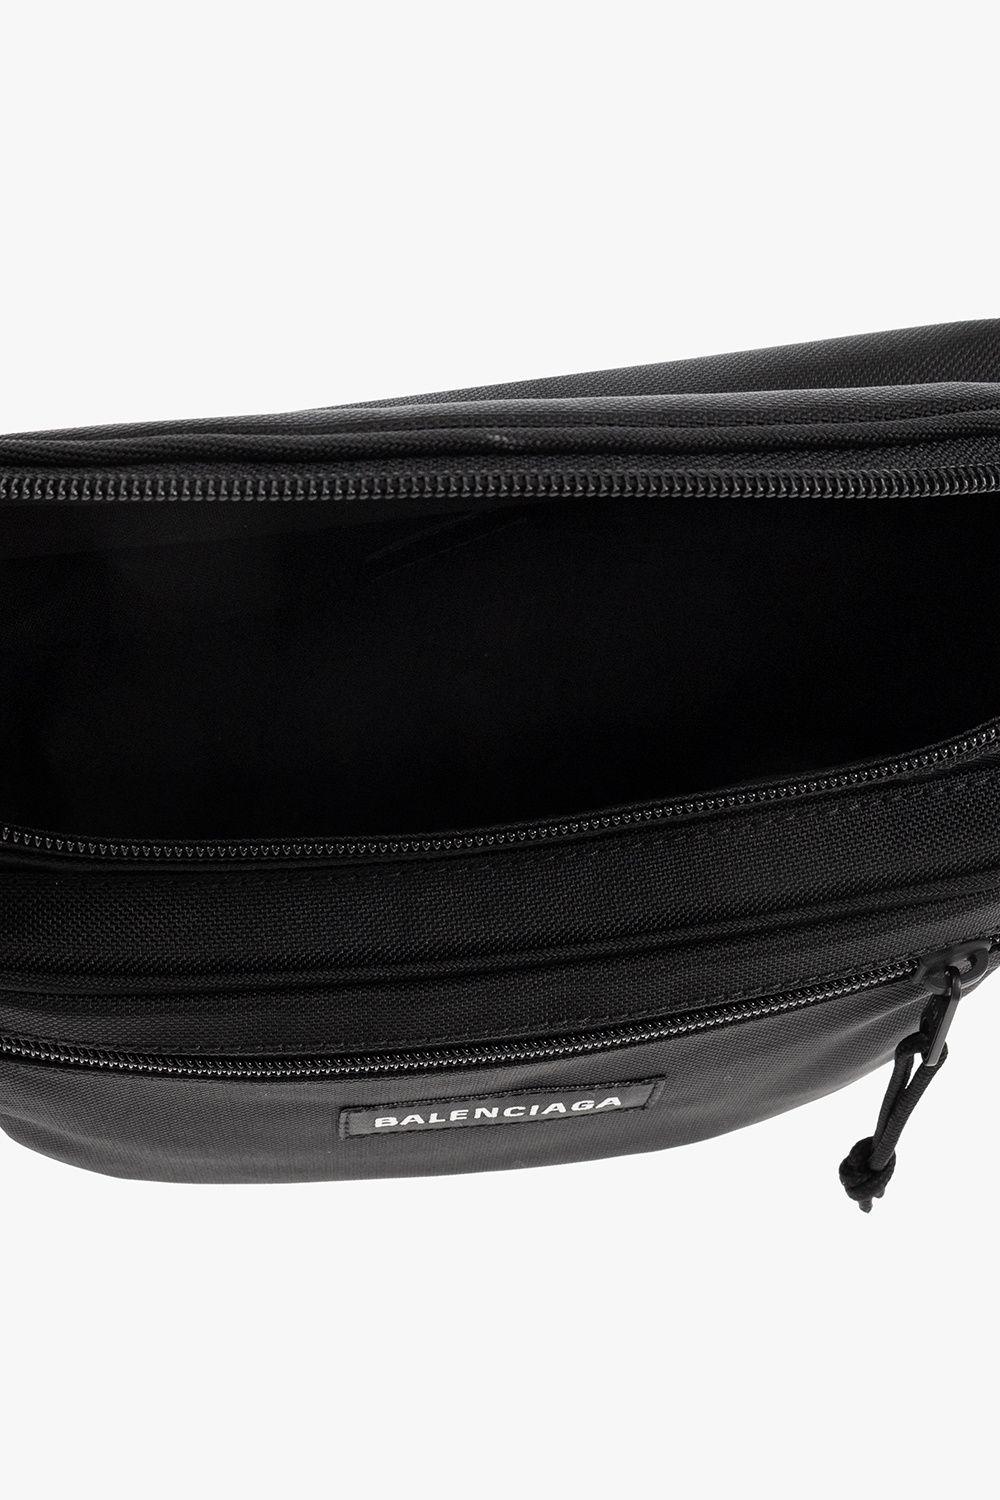 Balenciaga 'explorer' Belt Bag in Black | Lyst